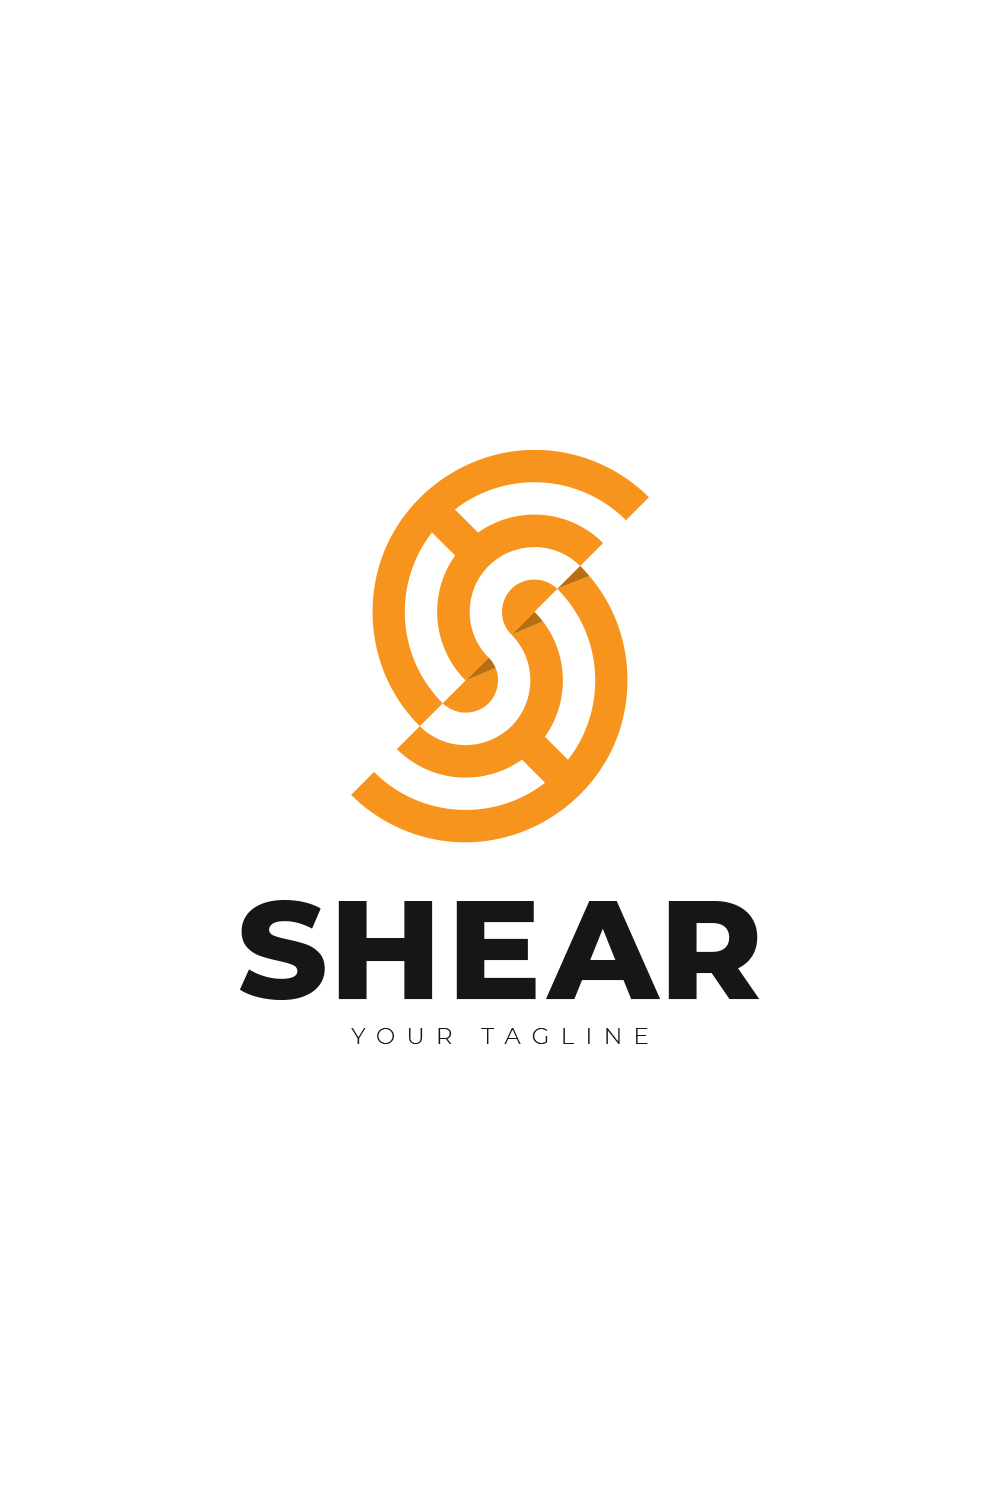 Shear Logo Template pinterest image.